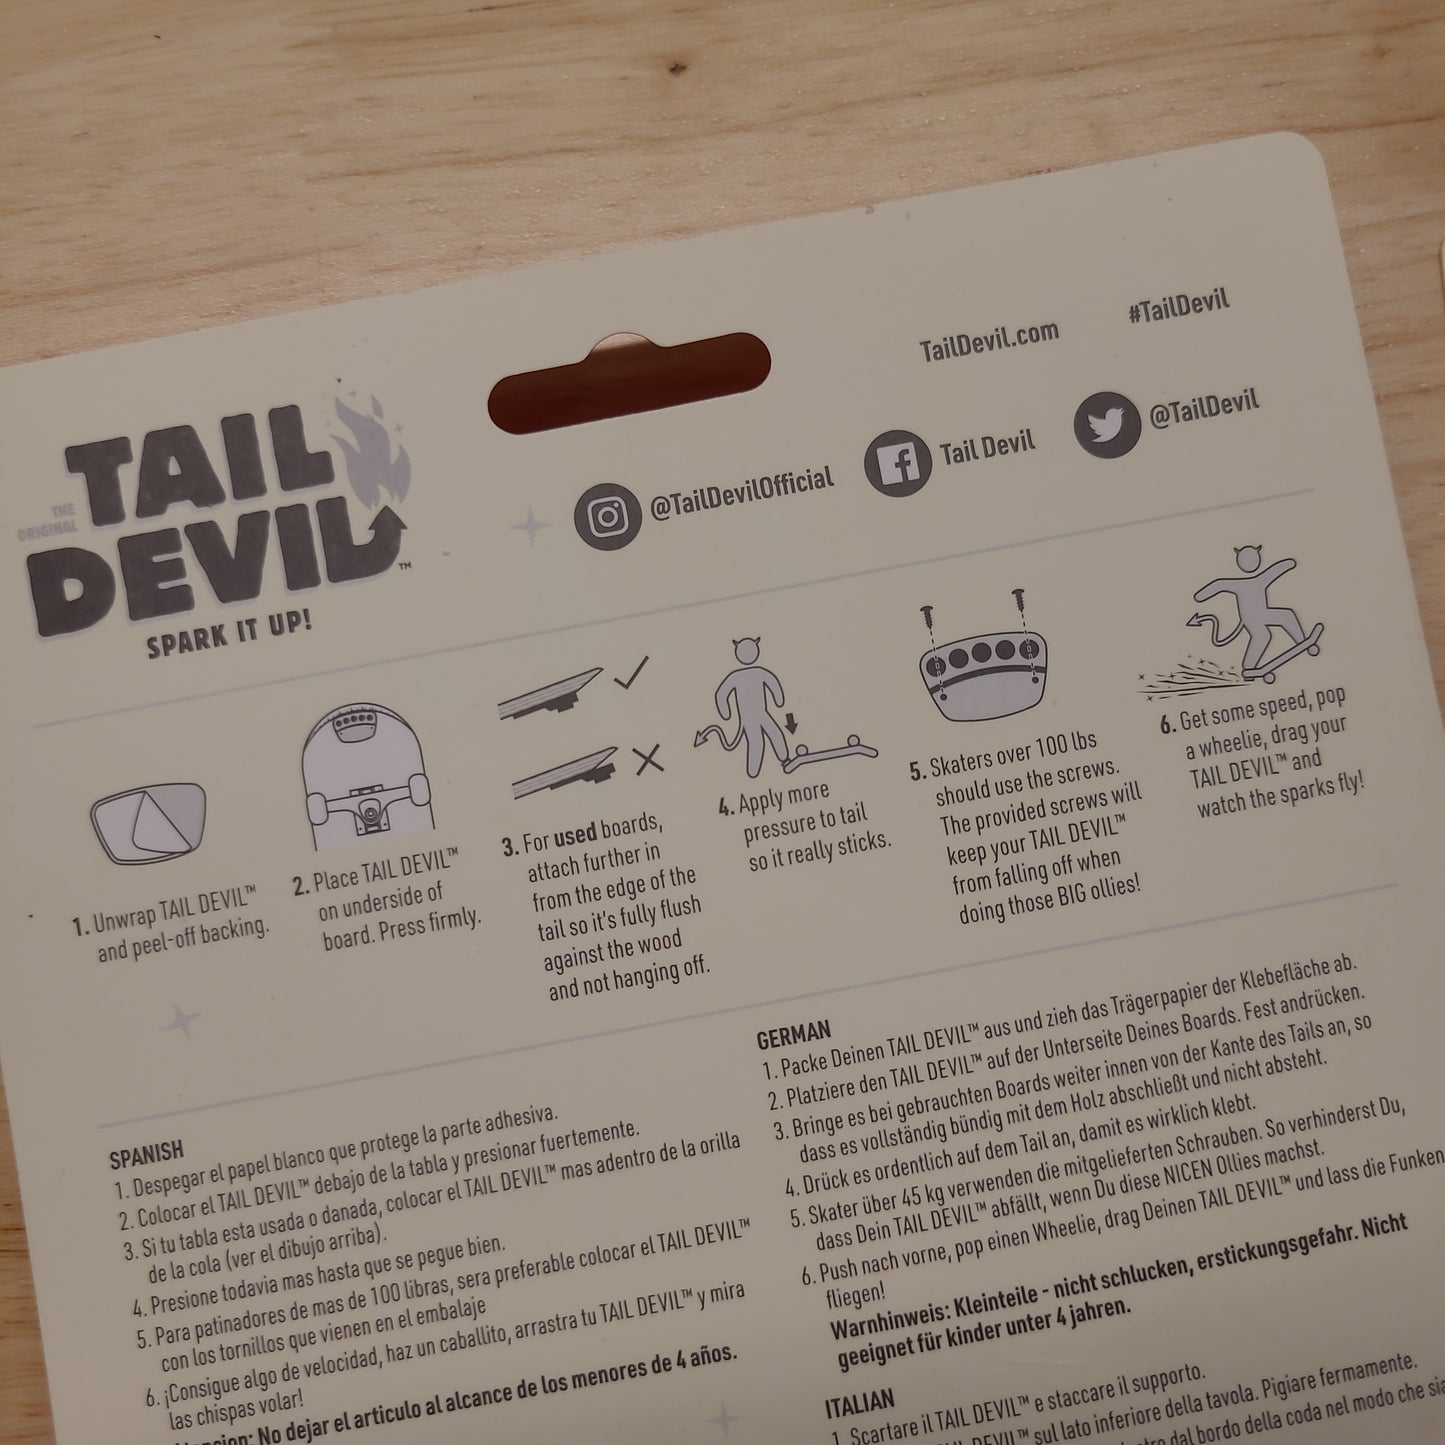 The Original Tail Devil